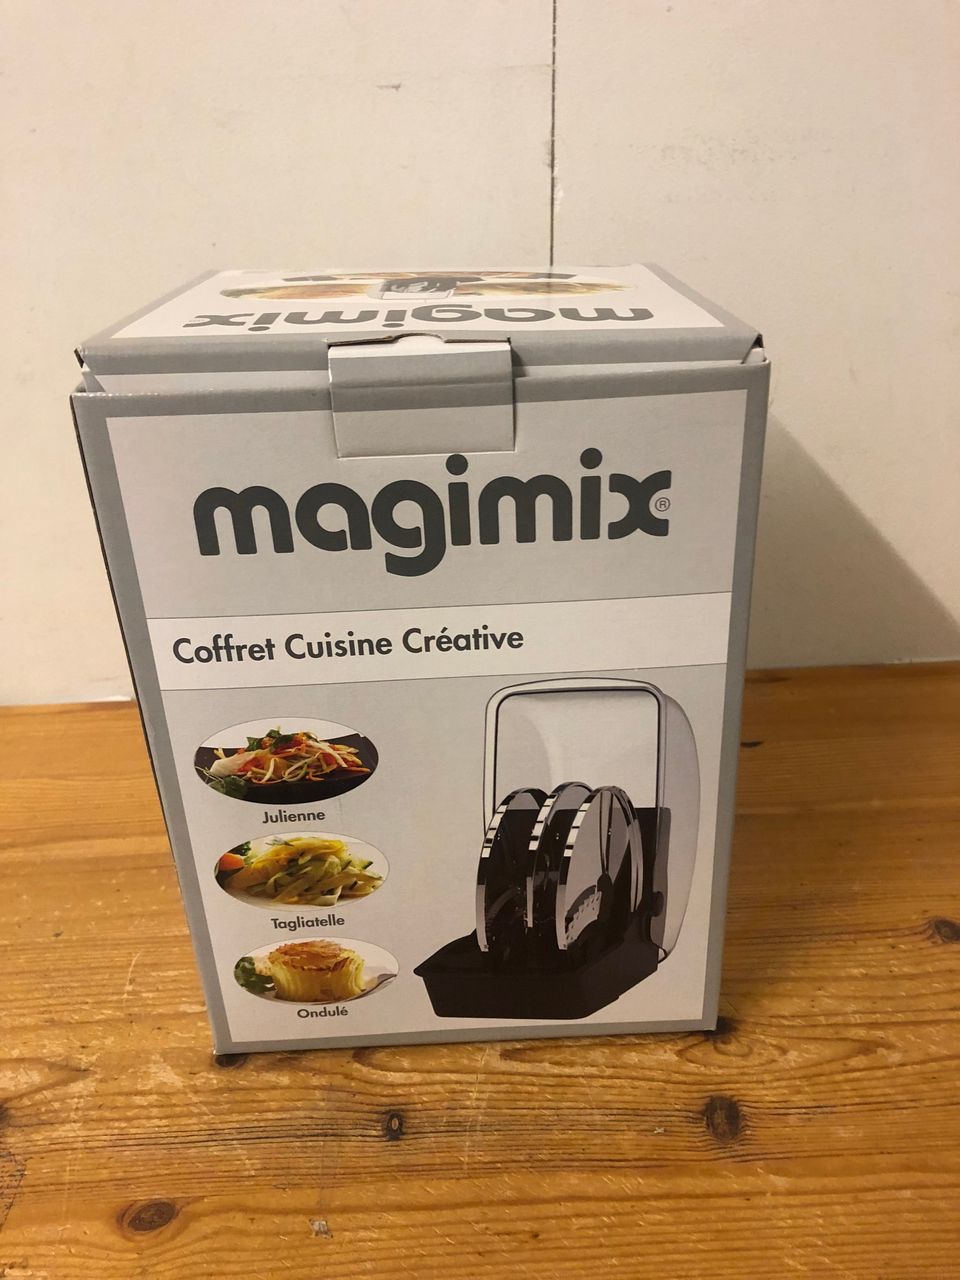 Magimix coffret cuisine creative